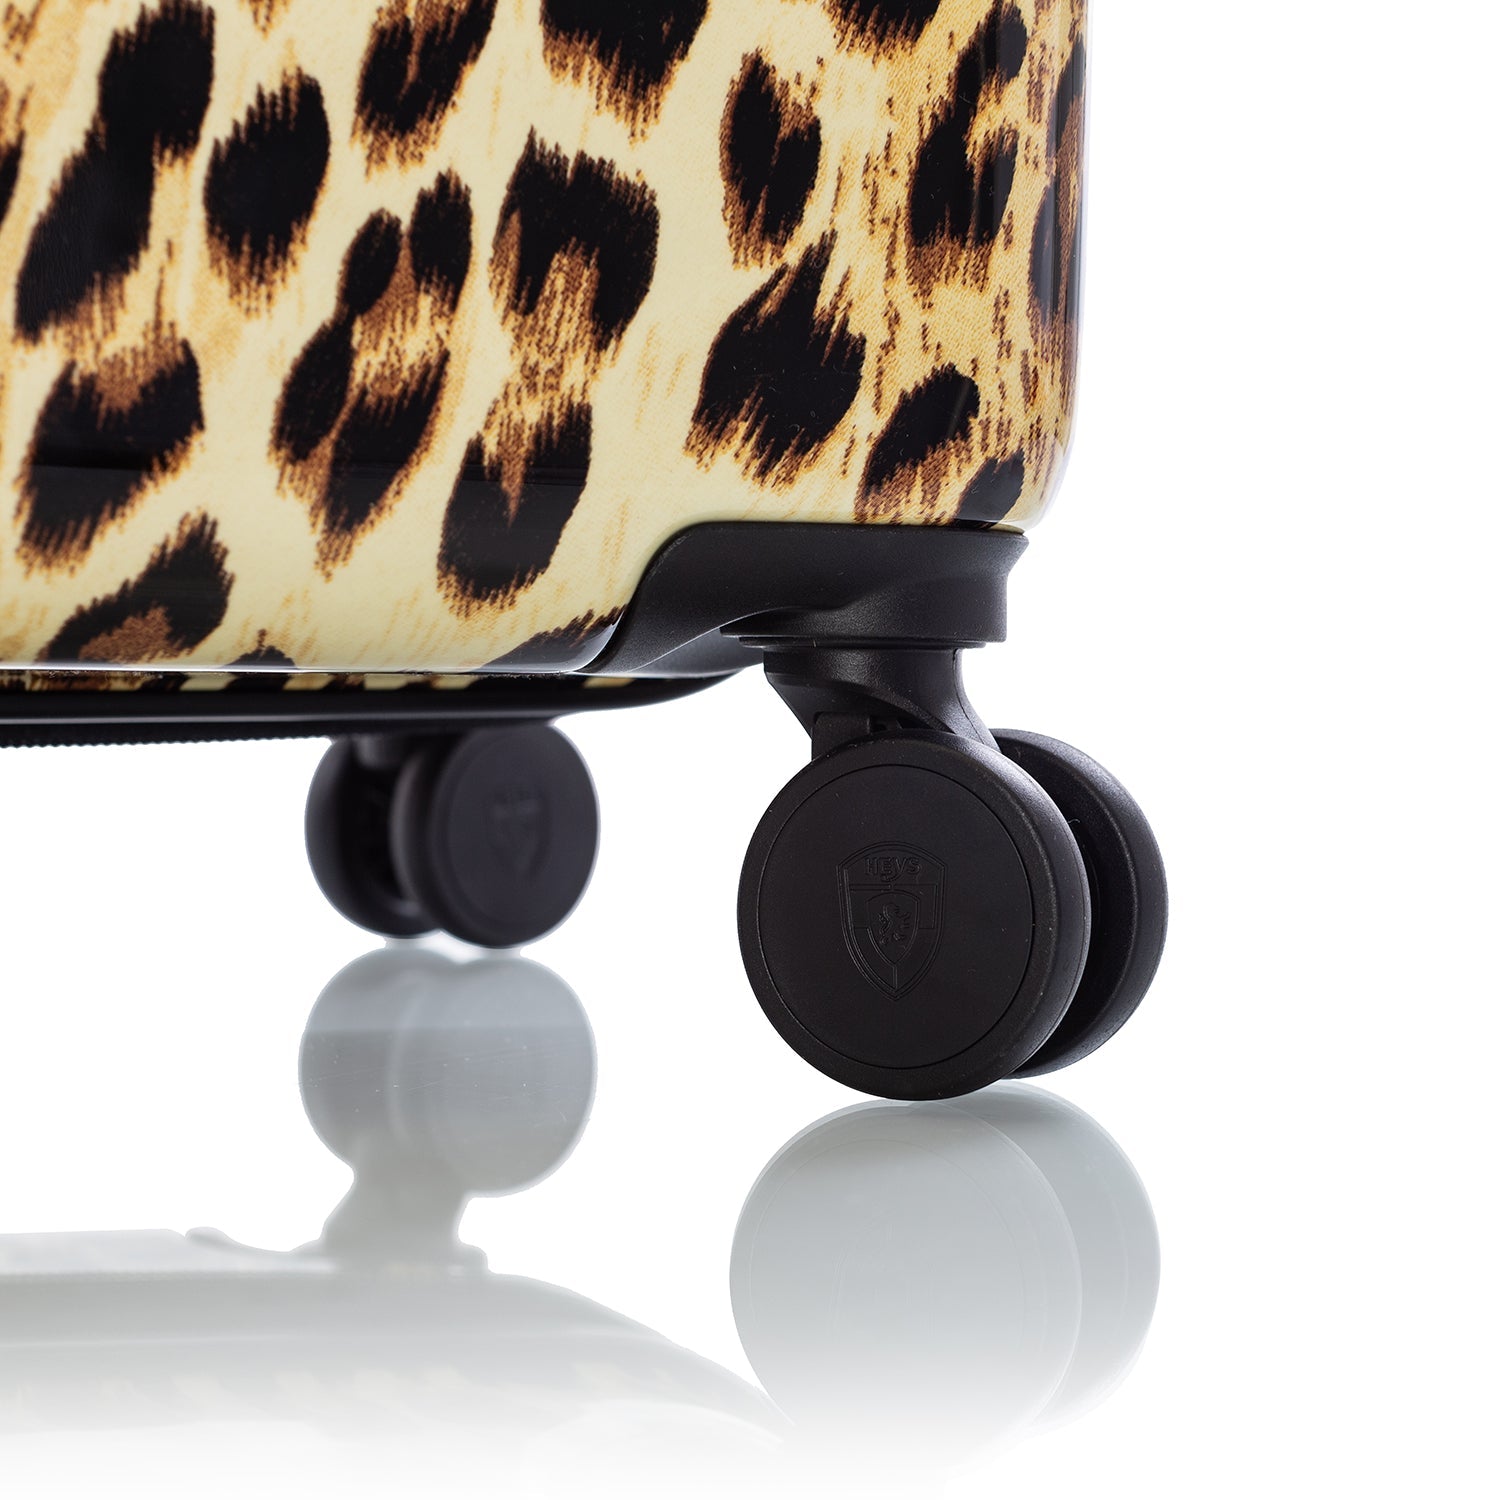 Brown Leopard Fashion Spinner® 3 Piece Luggage Set